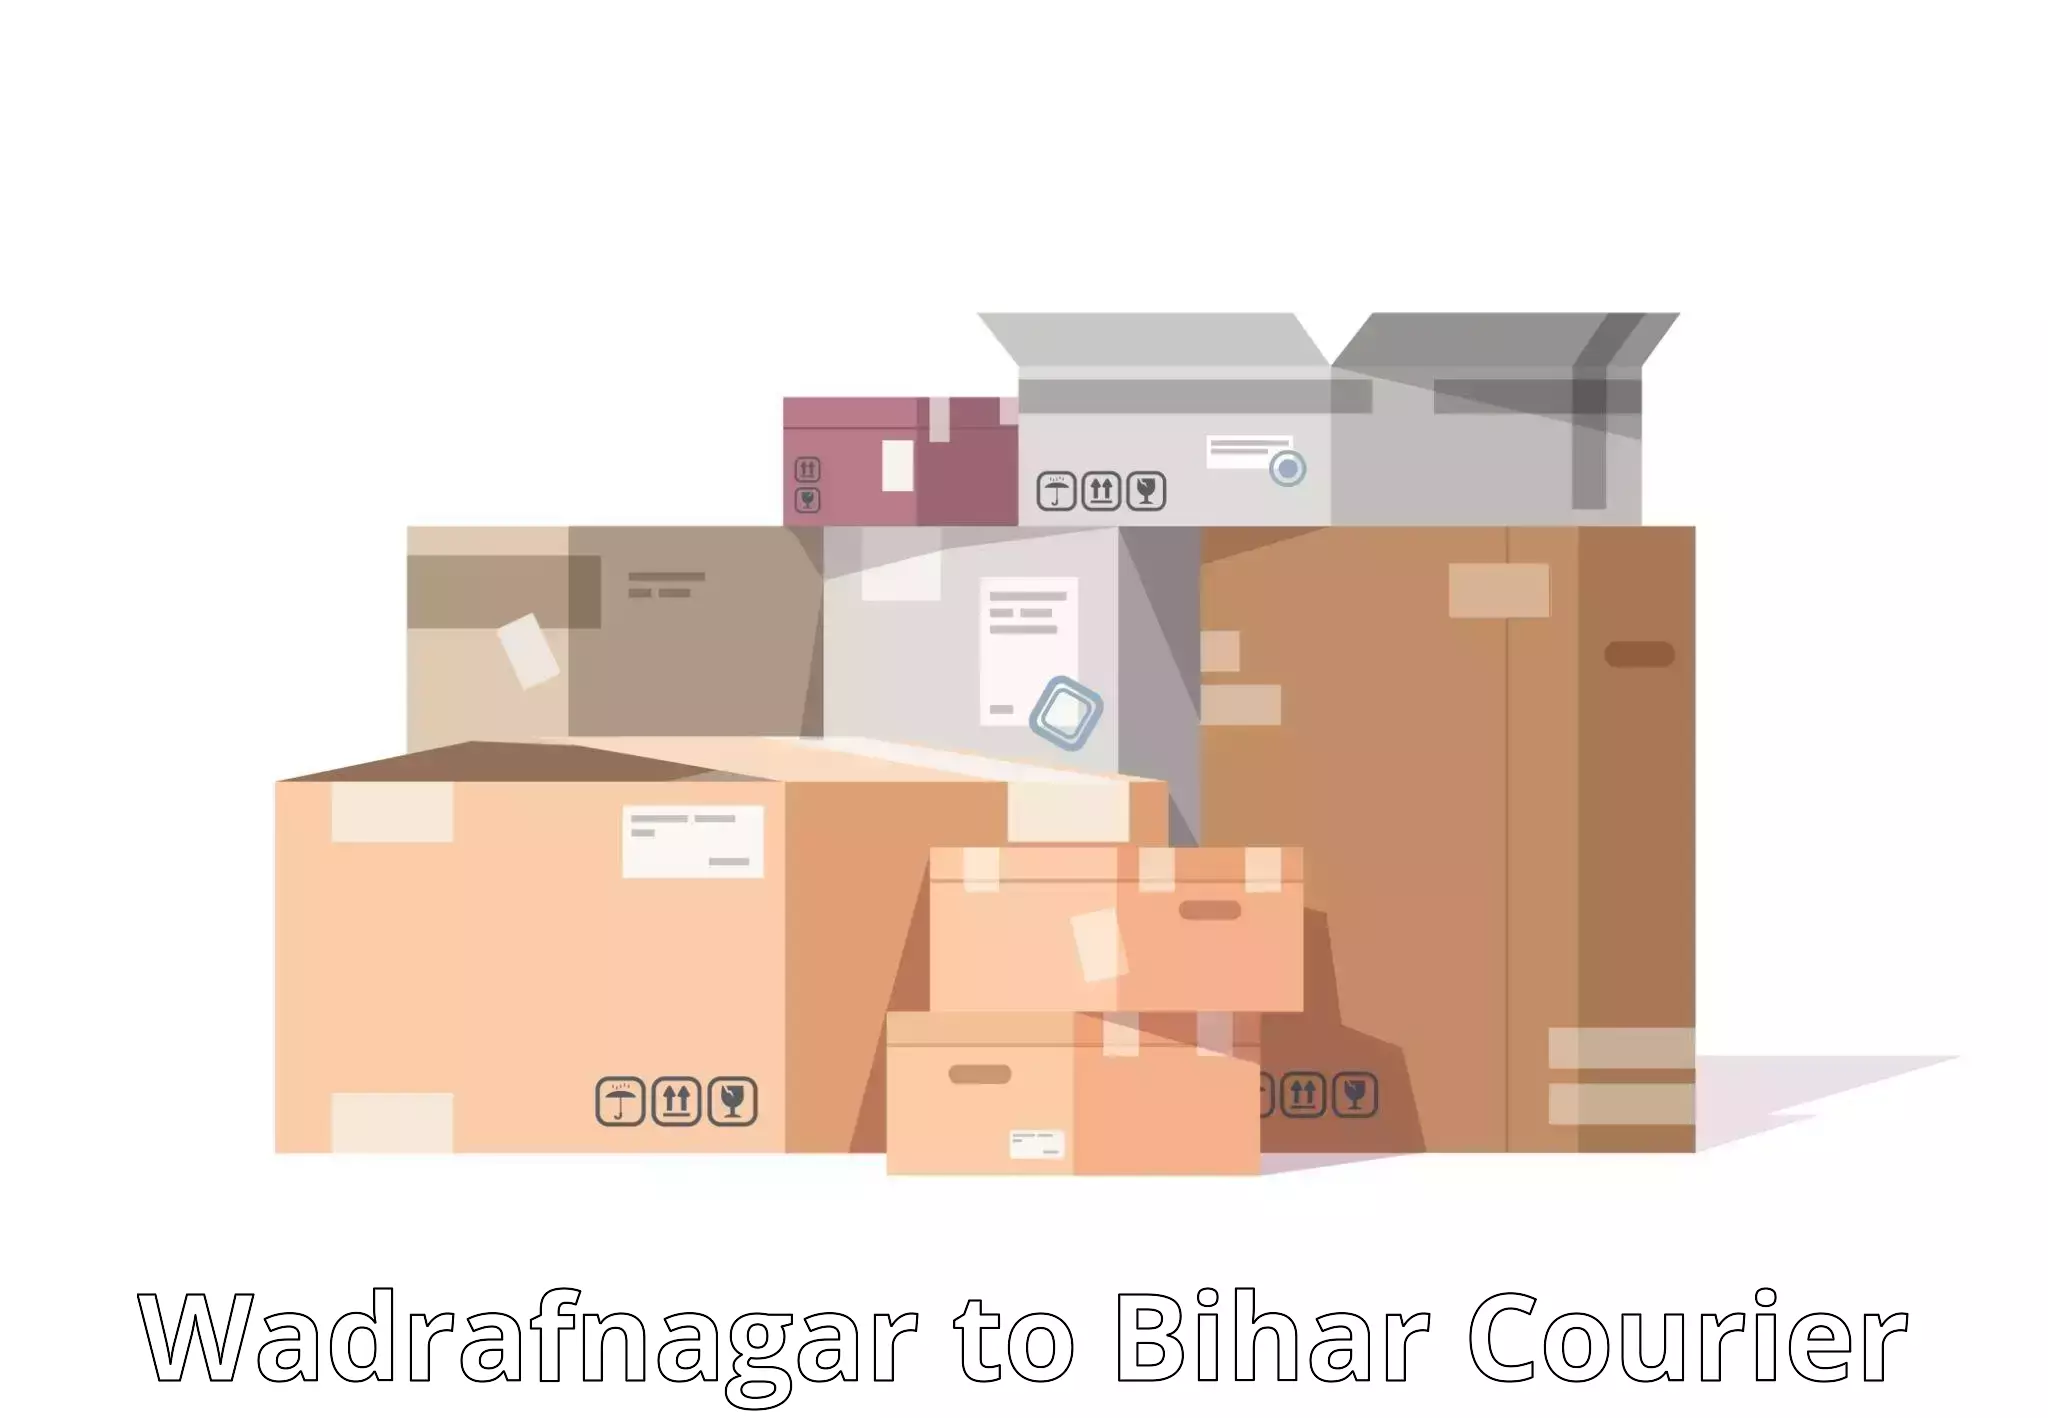 Courier service innovation Wadrafnagar to Brahmapur